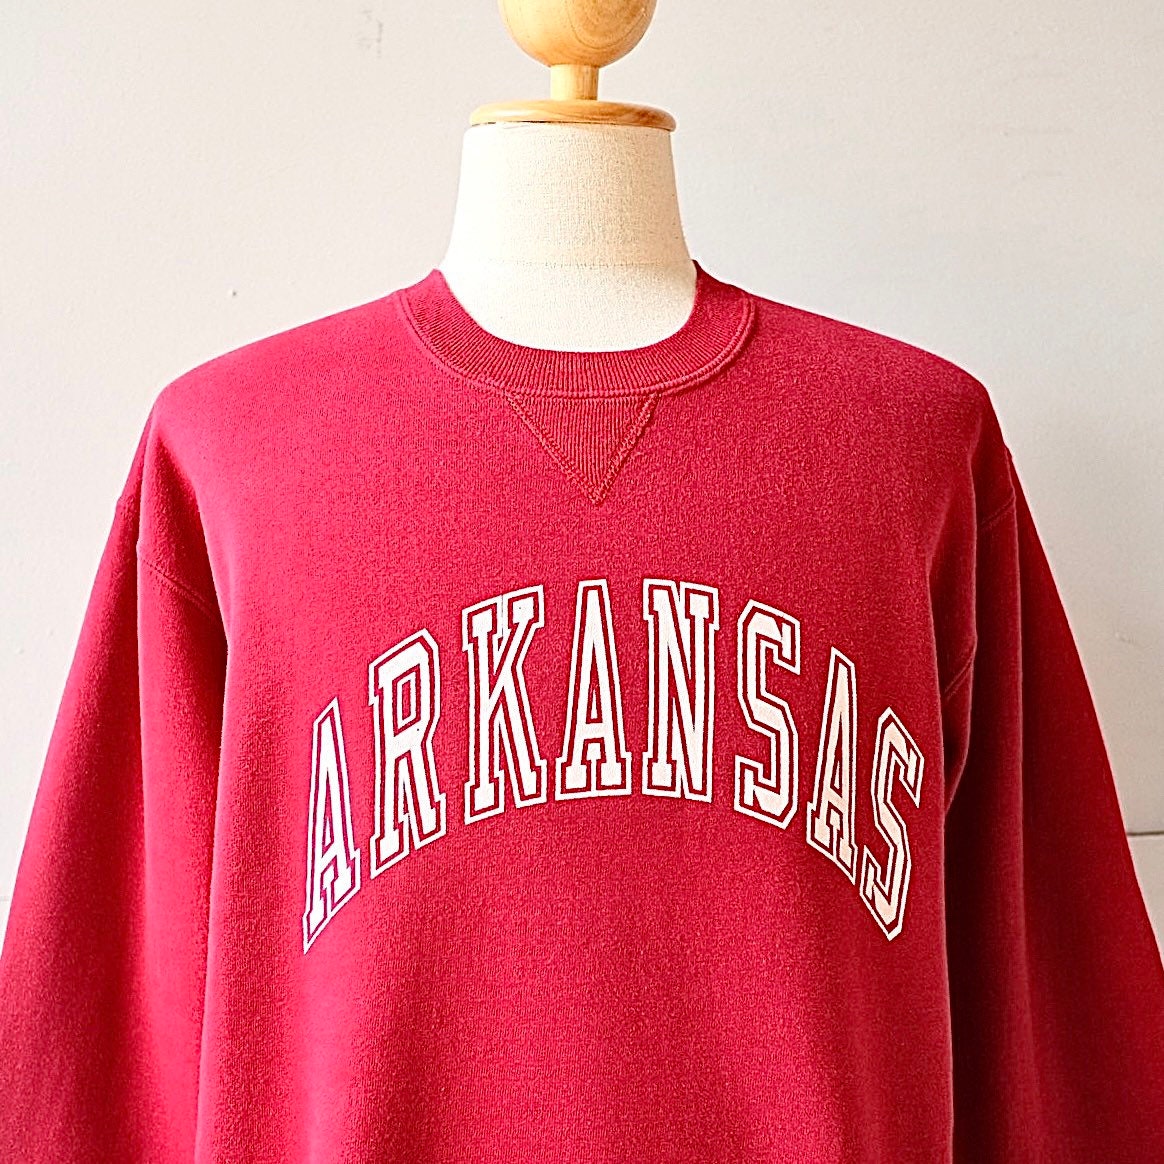 Vintage 90s Arkansas Razorbacks Sweatshirt size L | Etsy